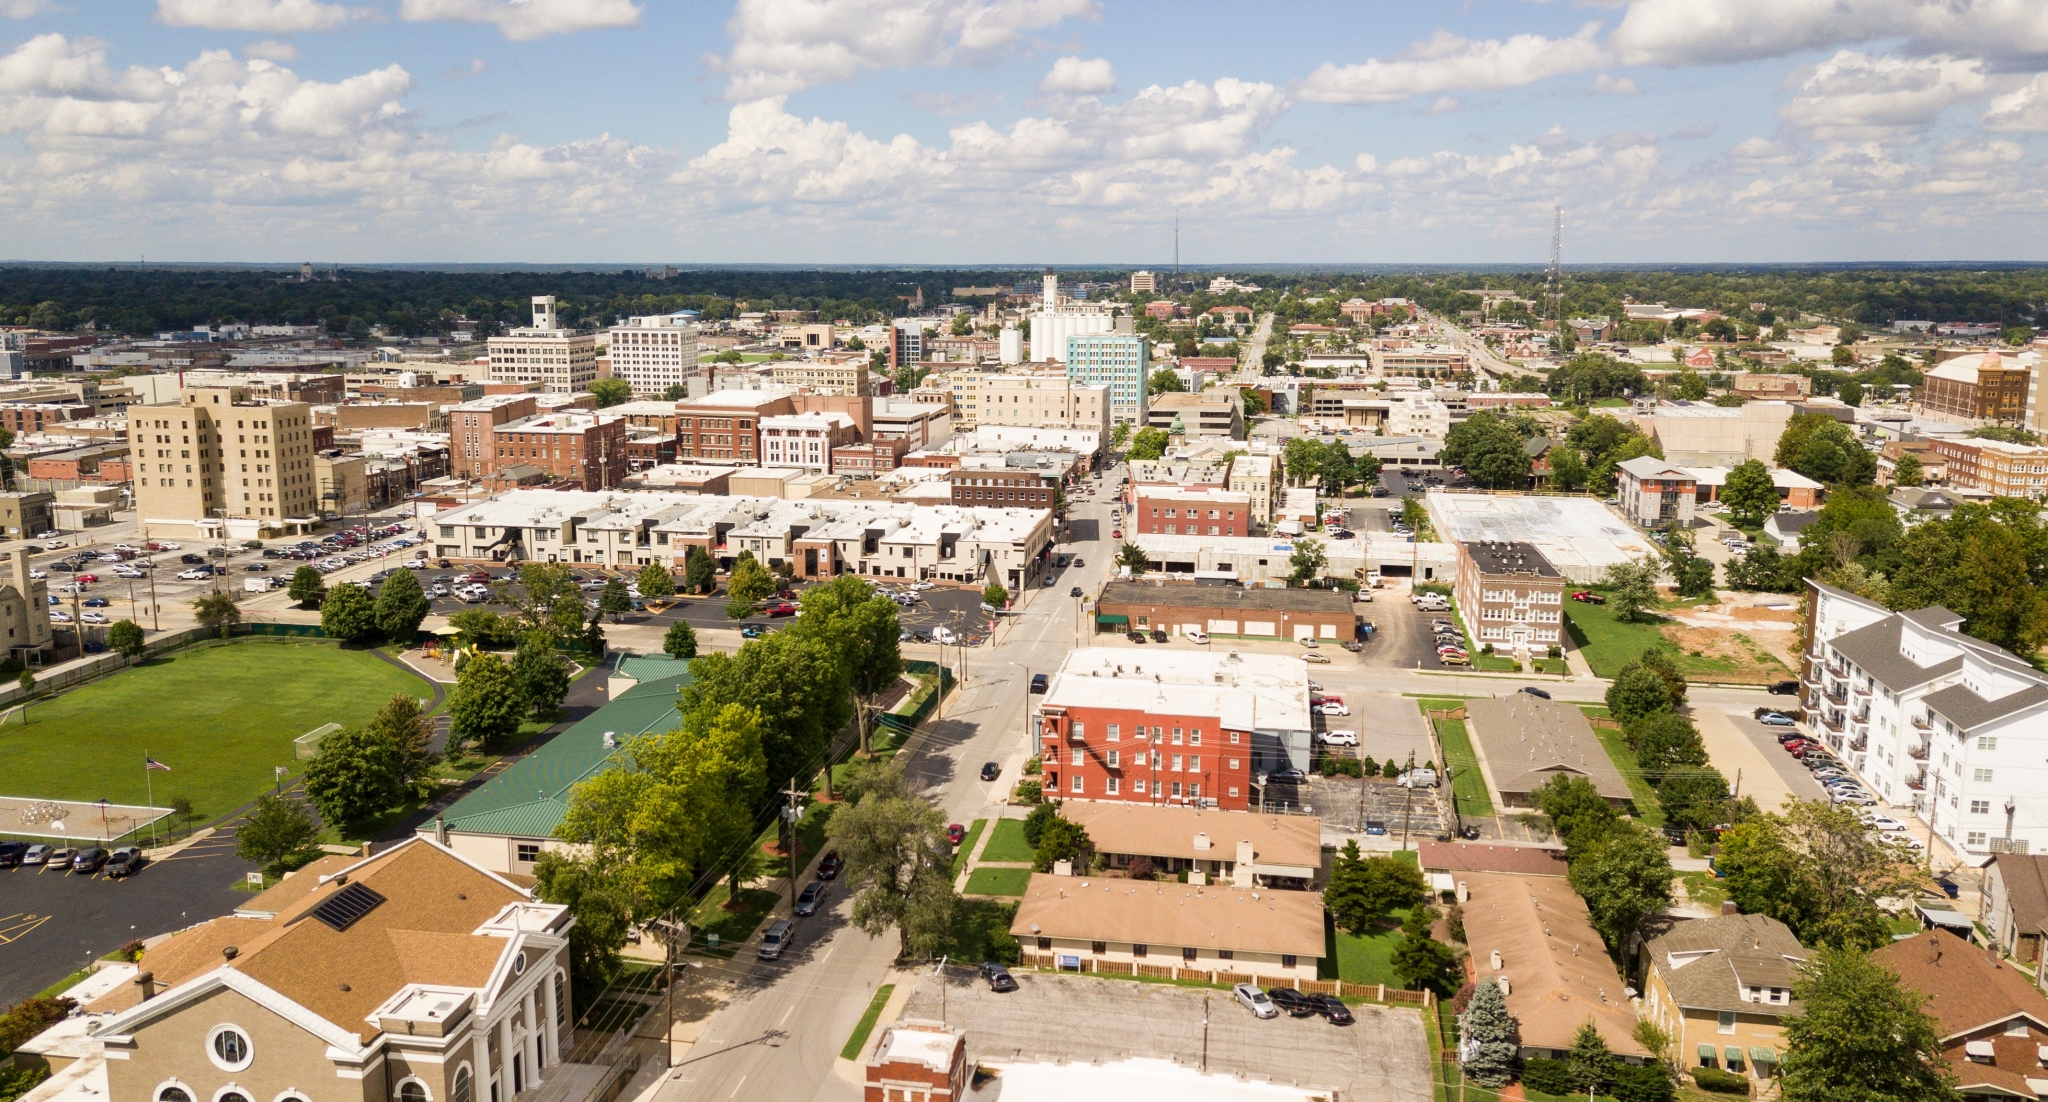 Aerial view of Springfield, Missouri